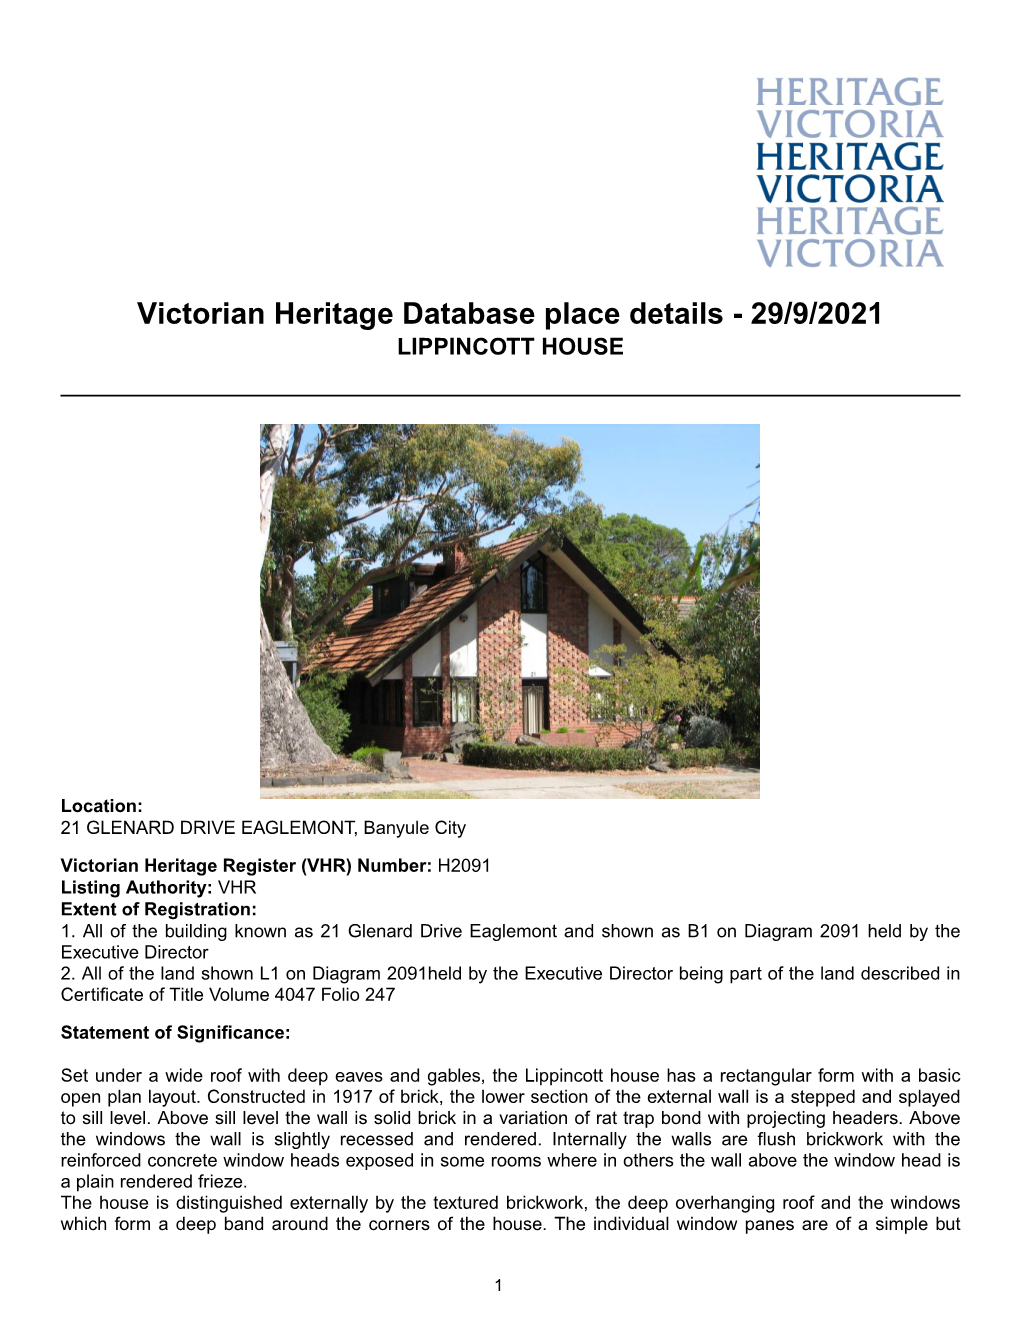 Victorian Heritage Database Place Details - 29/9/2021 LIPPINCOTT HOUSE